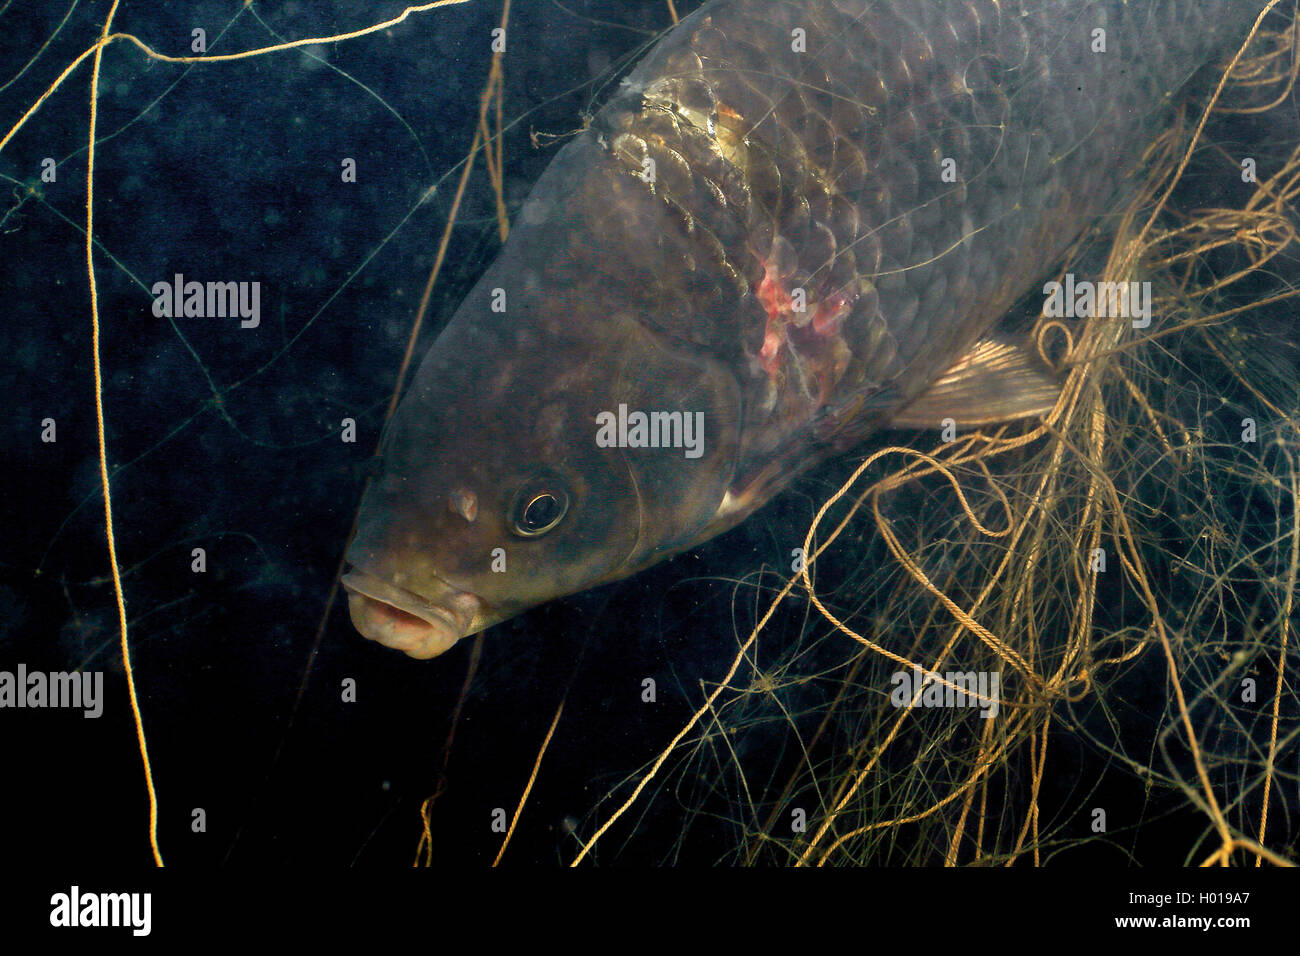 carp, common carp, European carp (Cyprinus carpio), carp in a net, Romania, Danube Delta Stock Photo